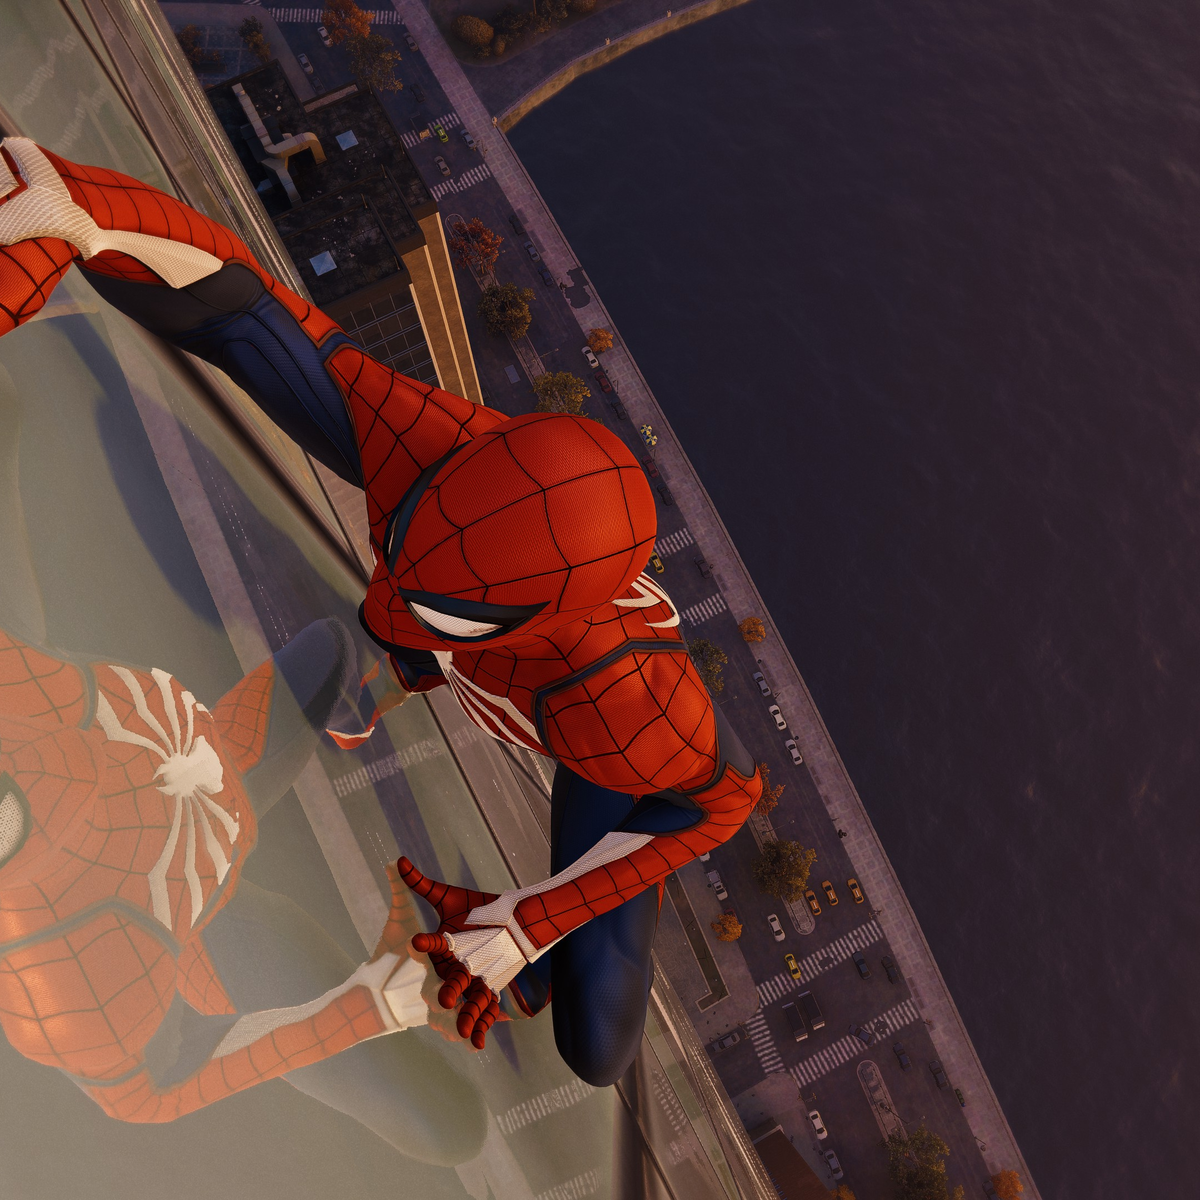 Marvel's Spider-Man Remastered: PC performance, system